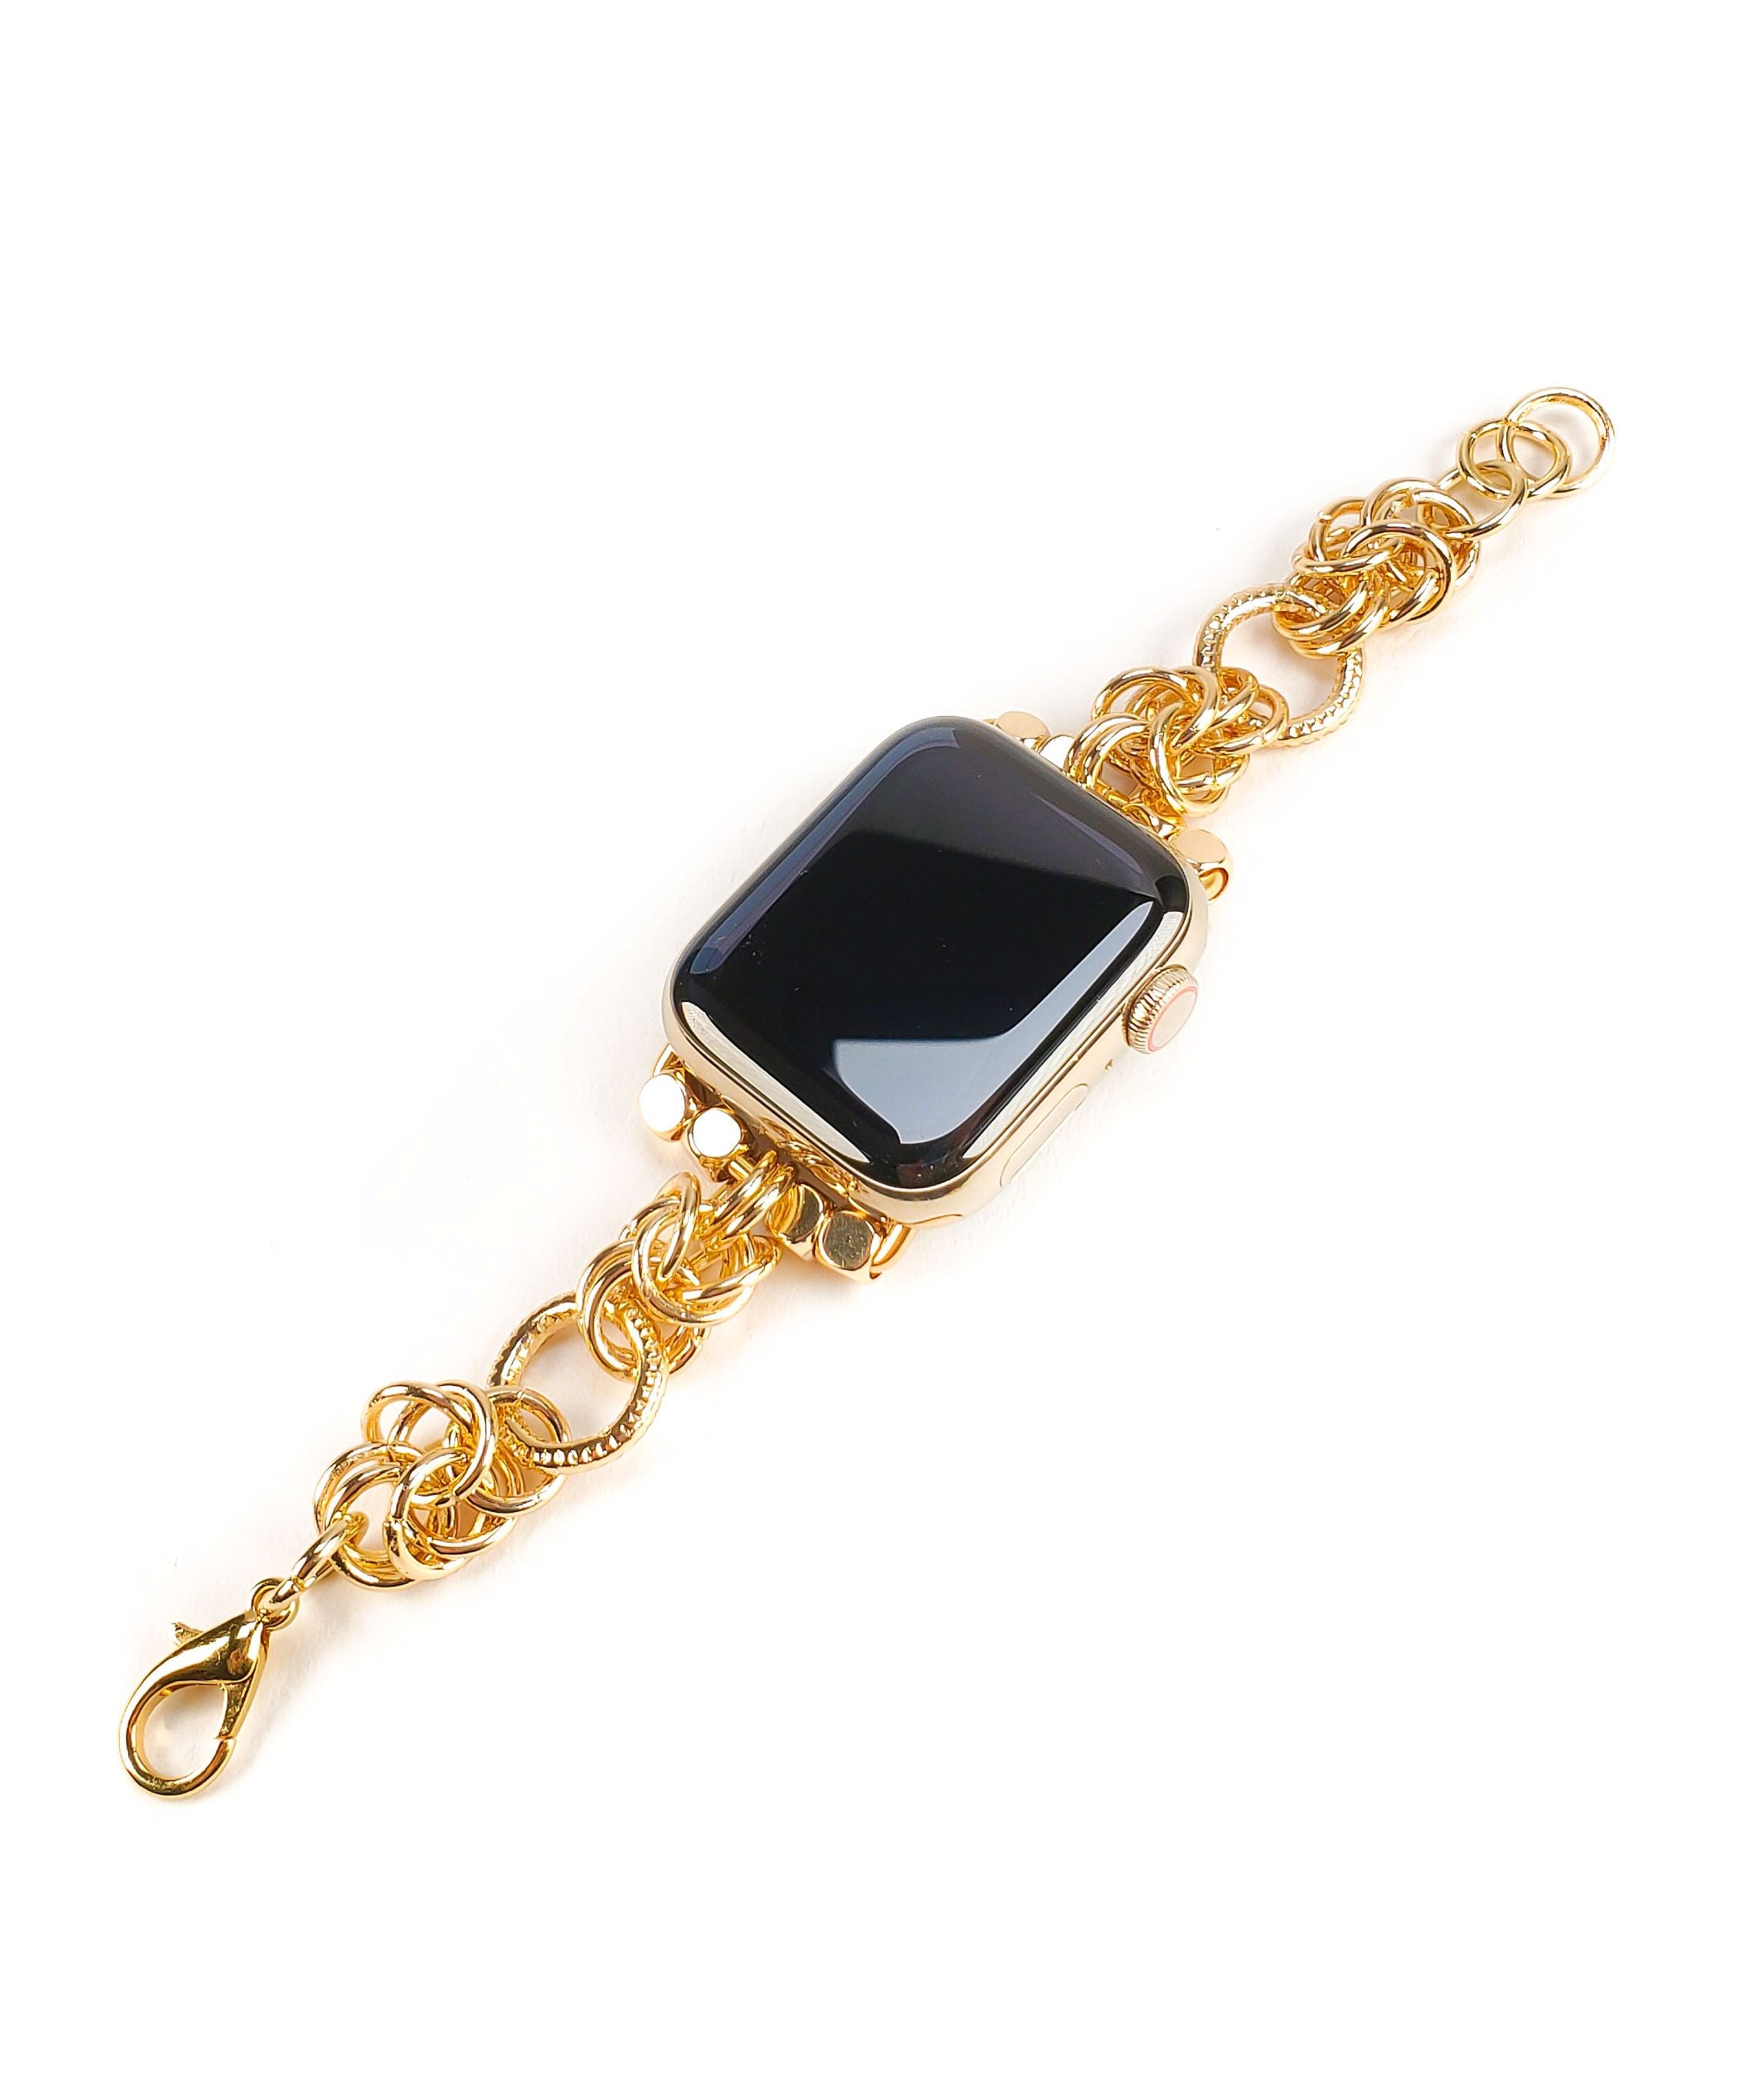 Boho Gold Twisted Chain Watch Bracelet Band